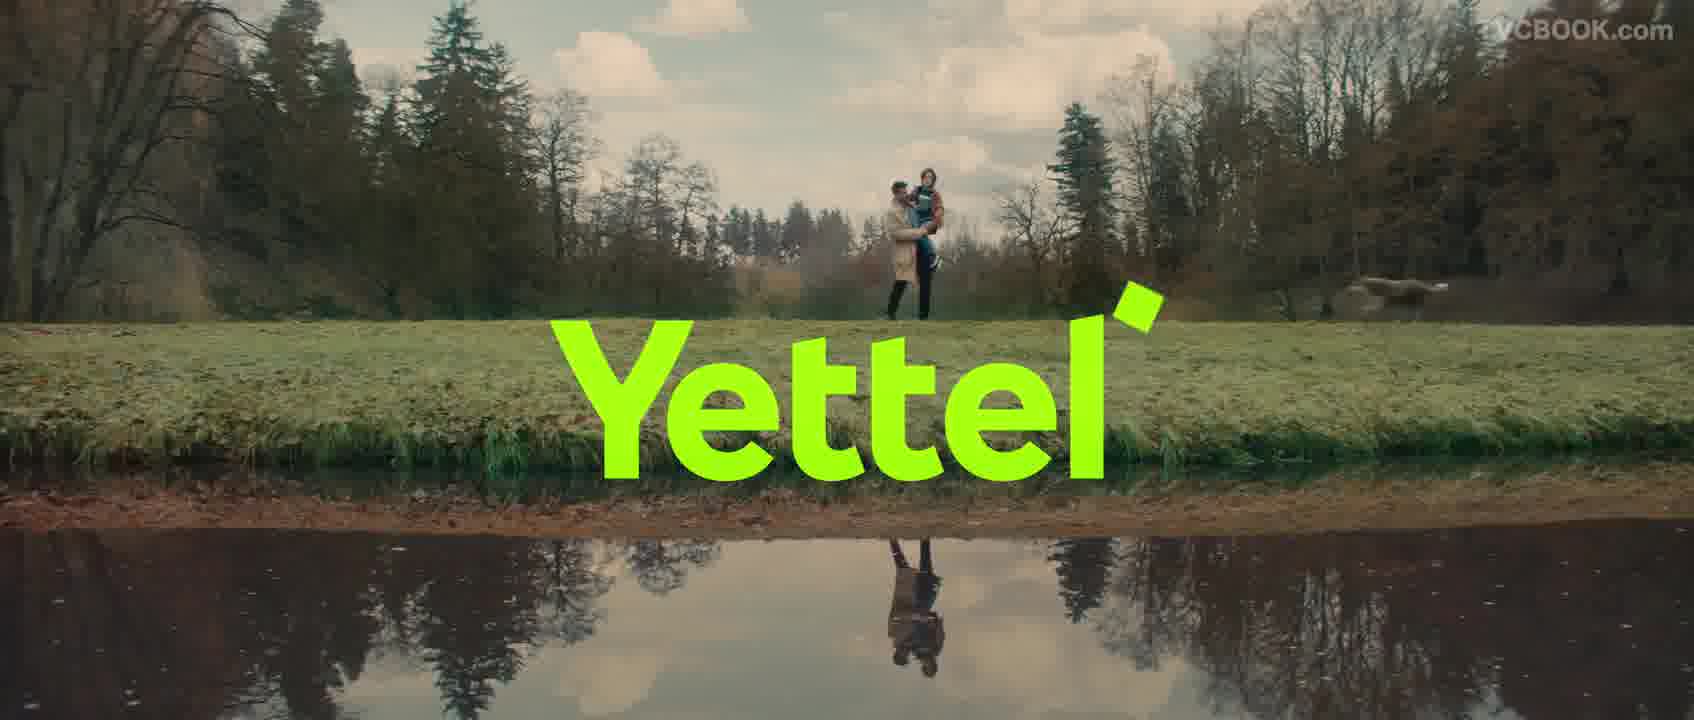 Yettel - Choices